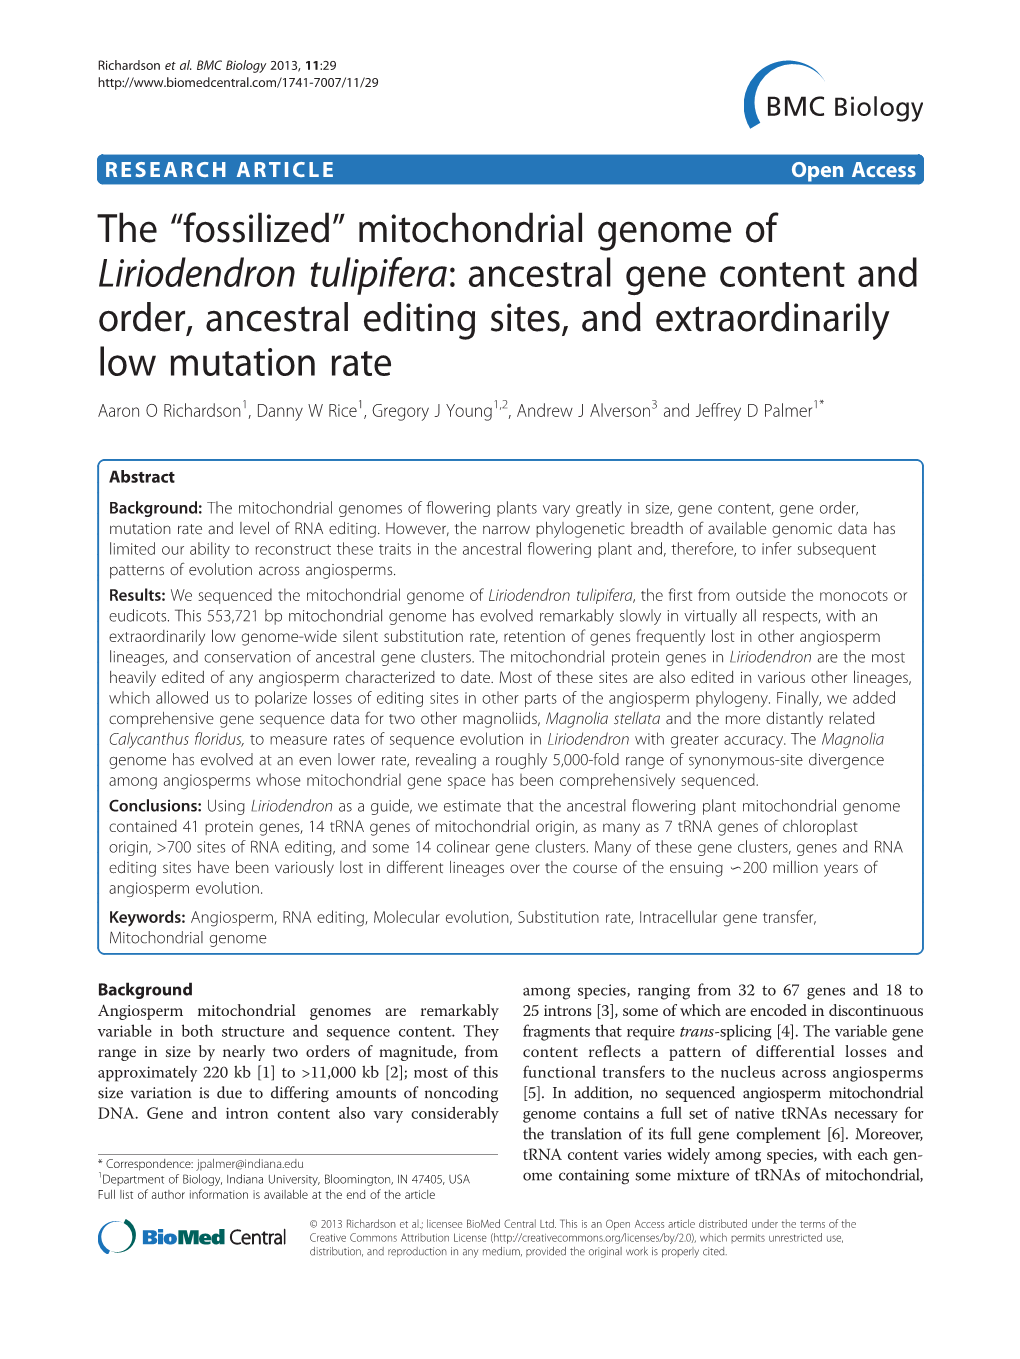 Mitochondrial Genome of Liriodendron Tulipifera: Ancestral Gene Content